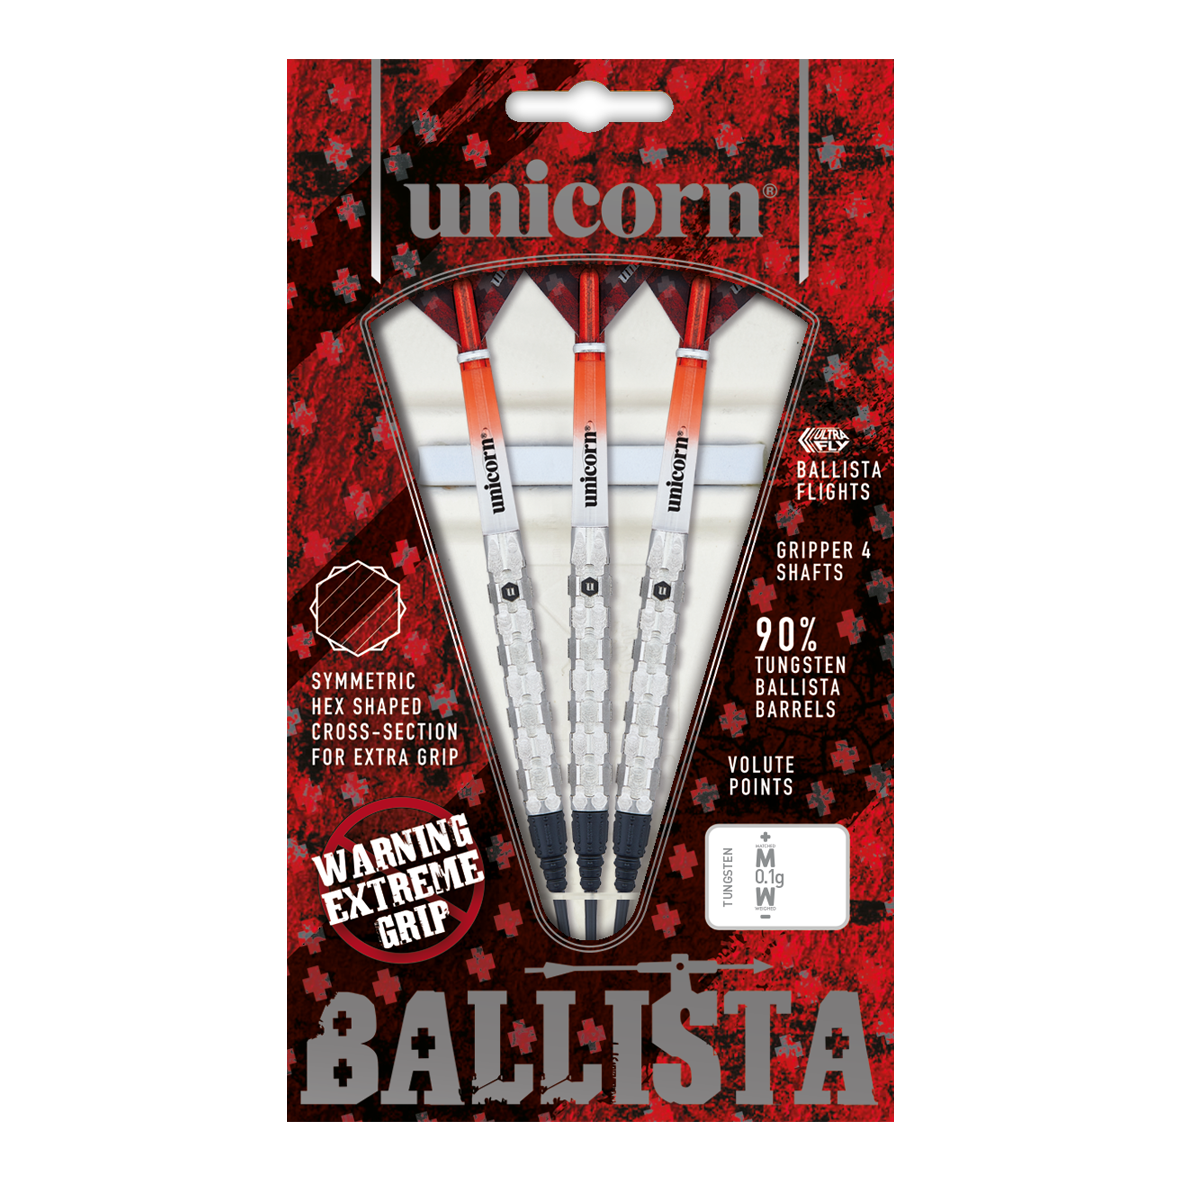 Unicorn Ballista Style 1 soft darts